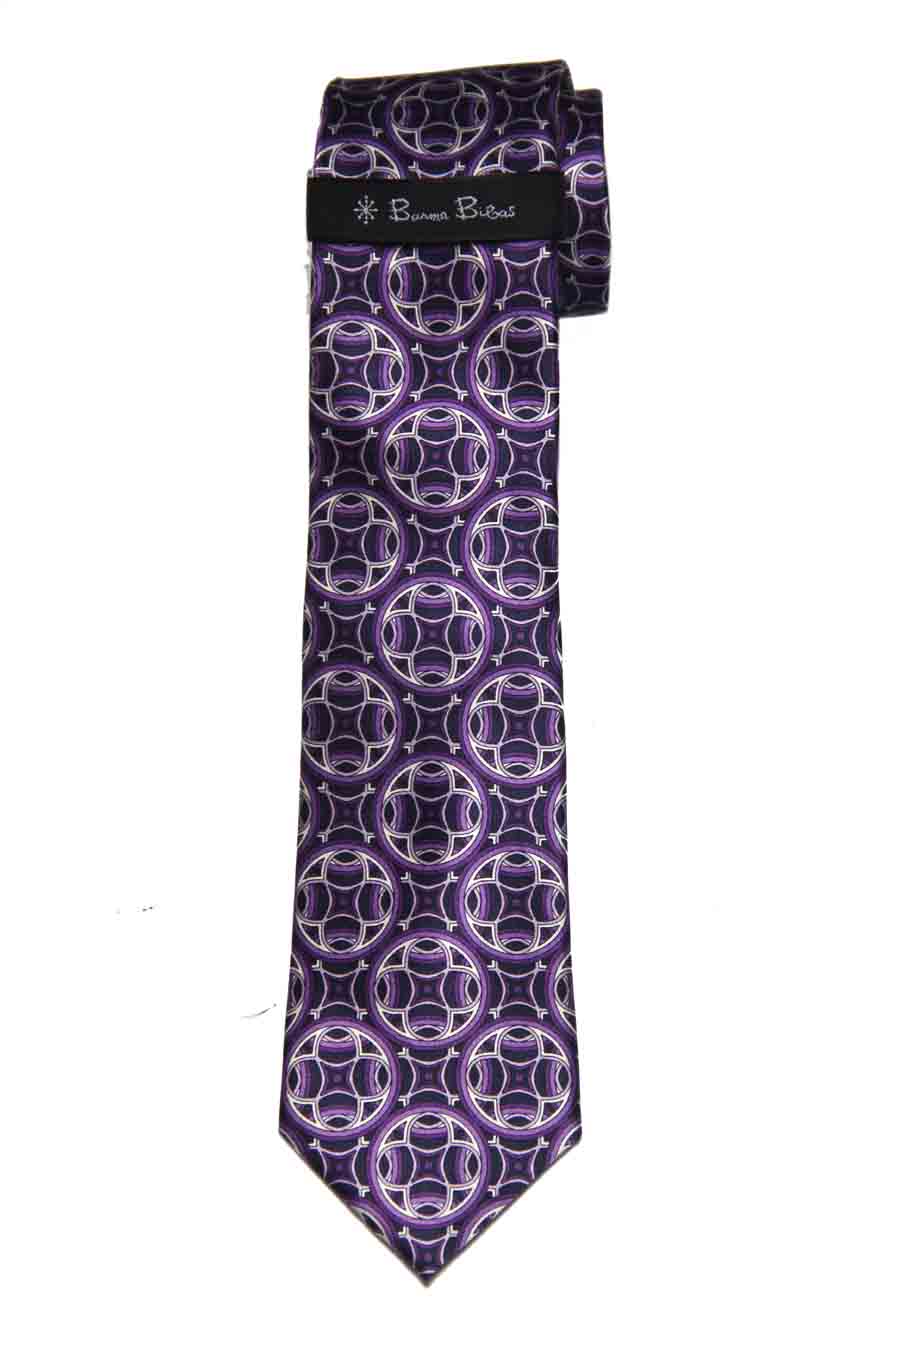 Burma Bibas Silk Tie Purple Black White Geometric Men's